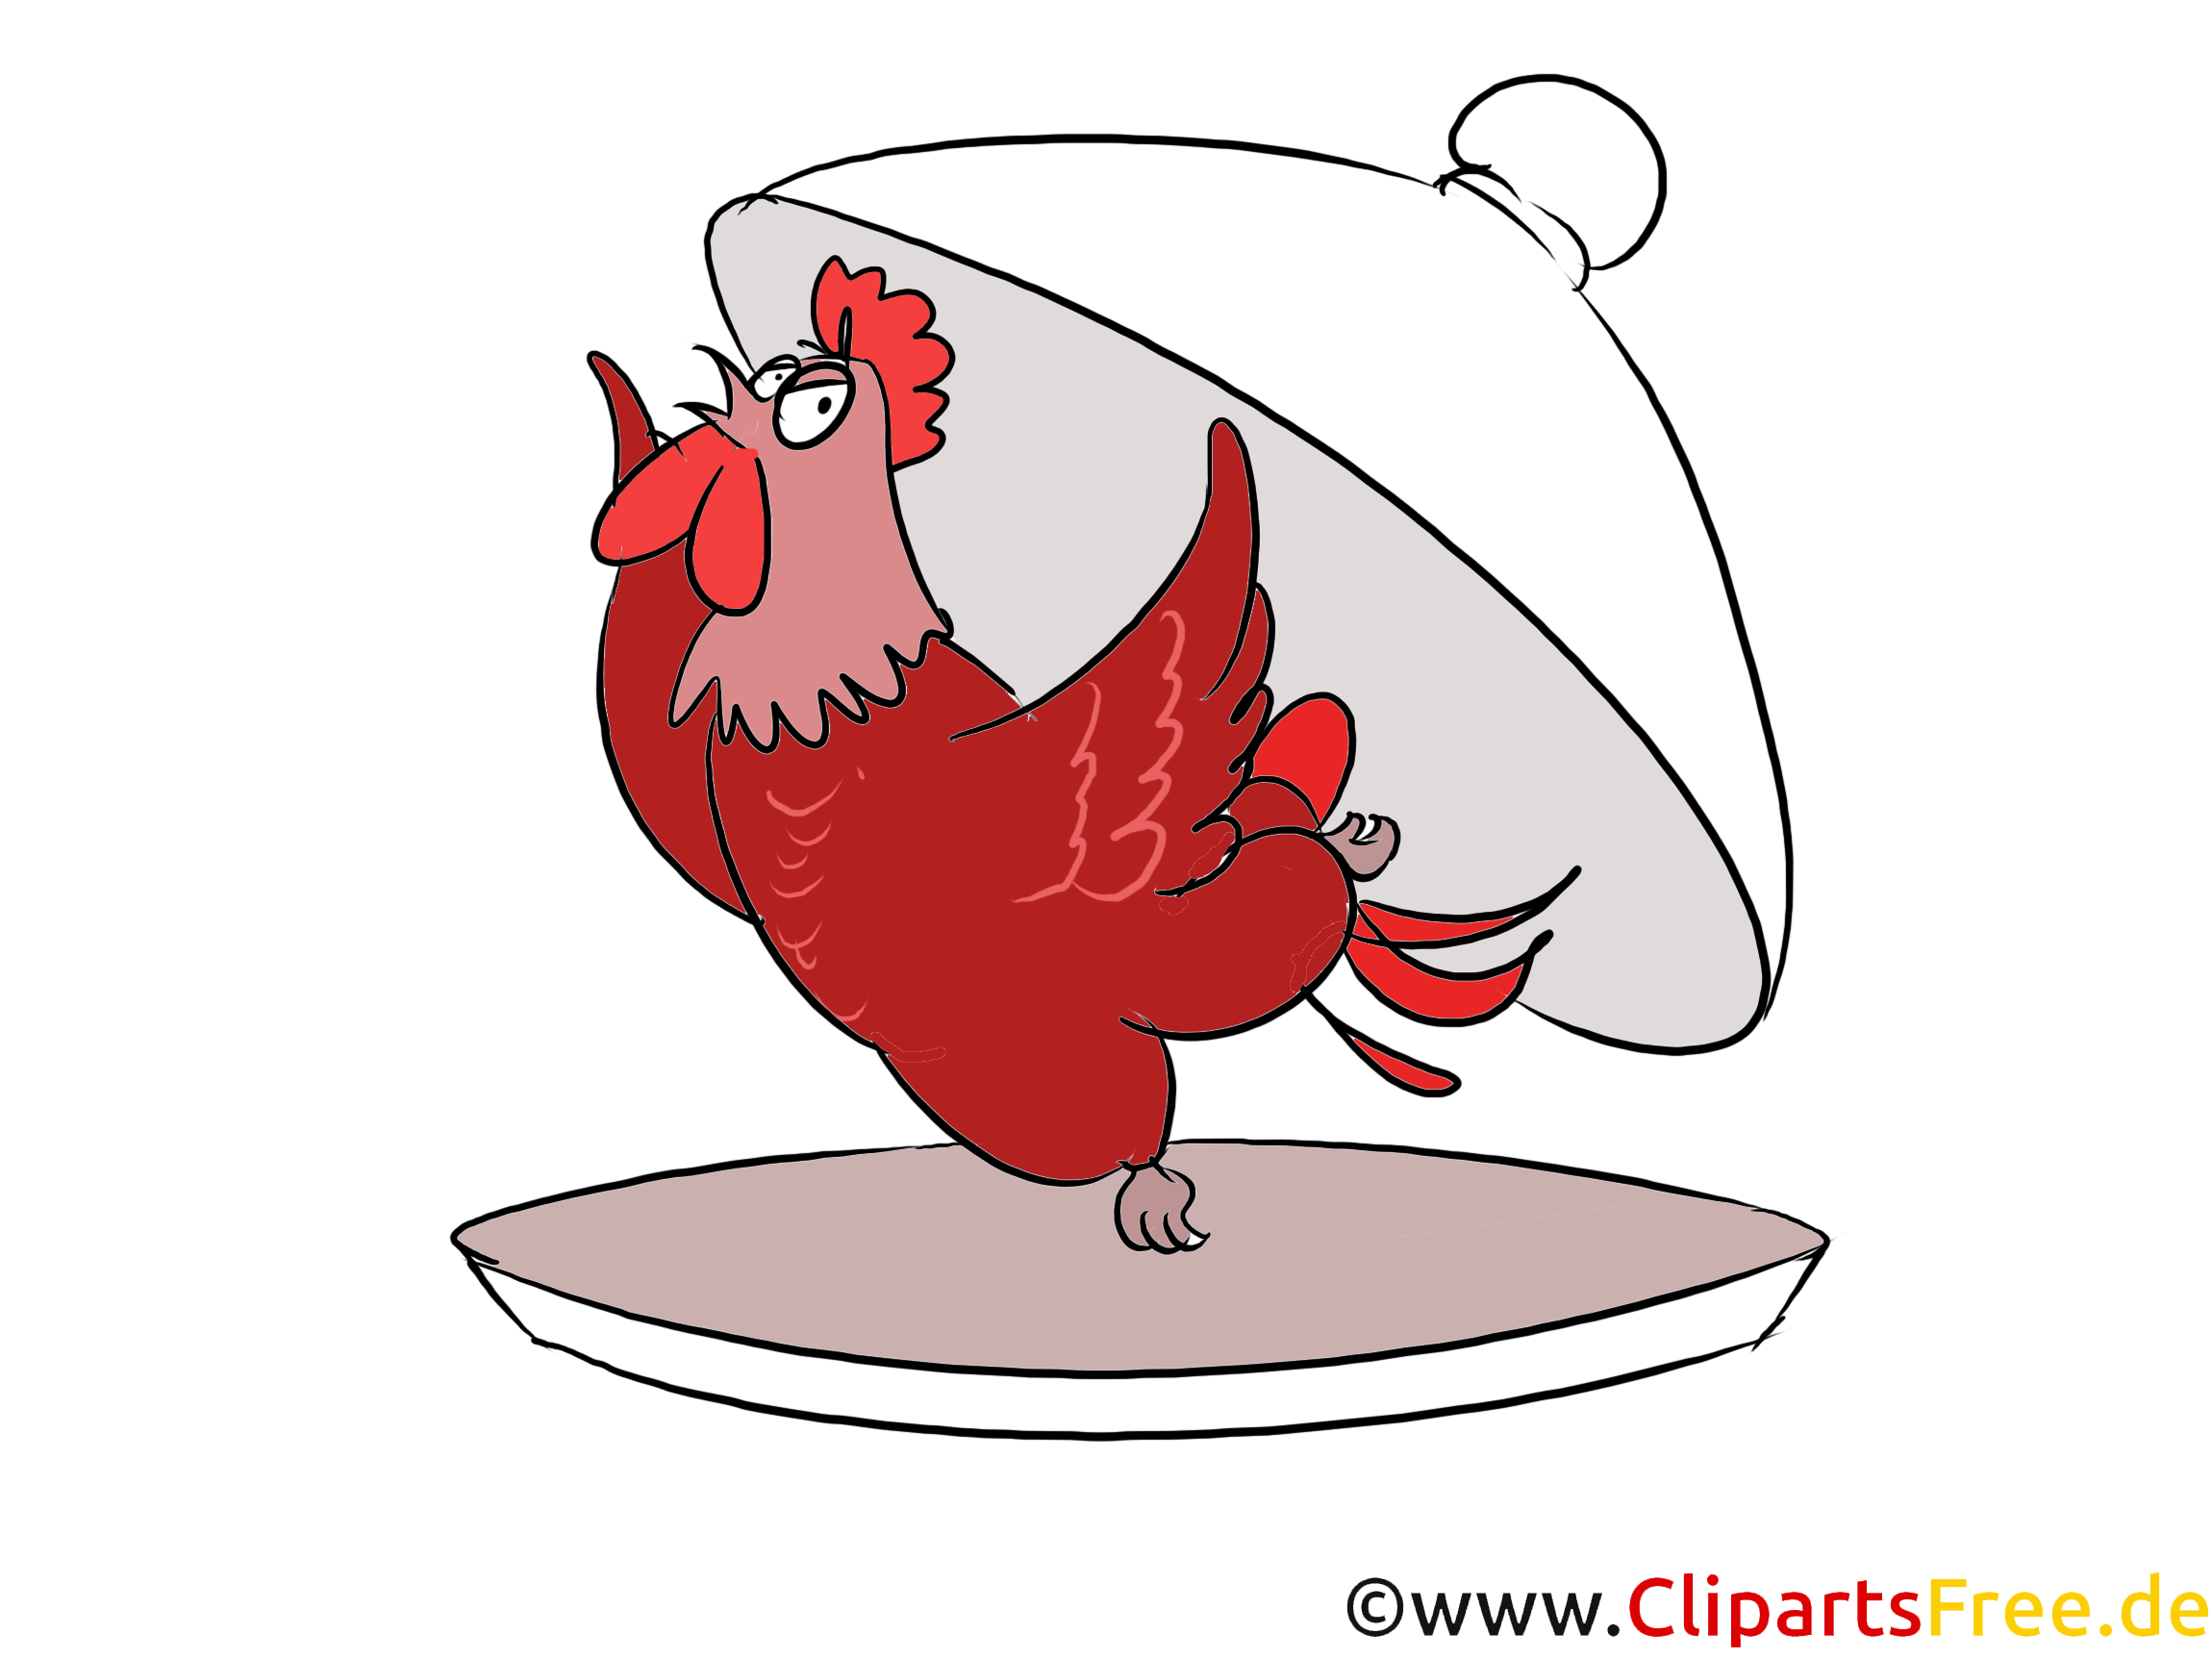 Huhn auf dem Teller im Restaurant Clipart, Bild, Grafik